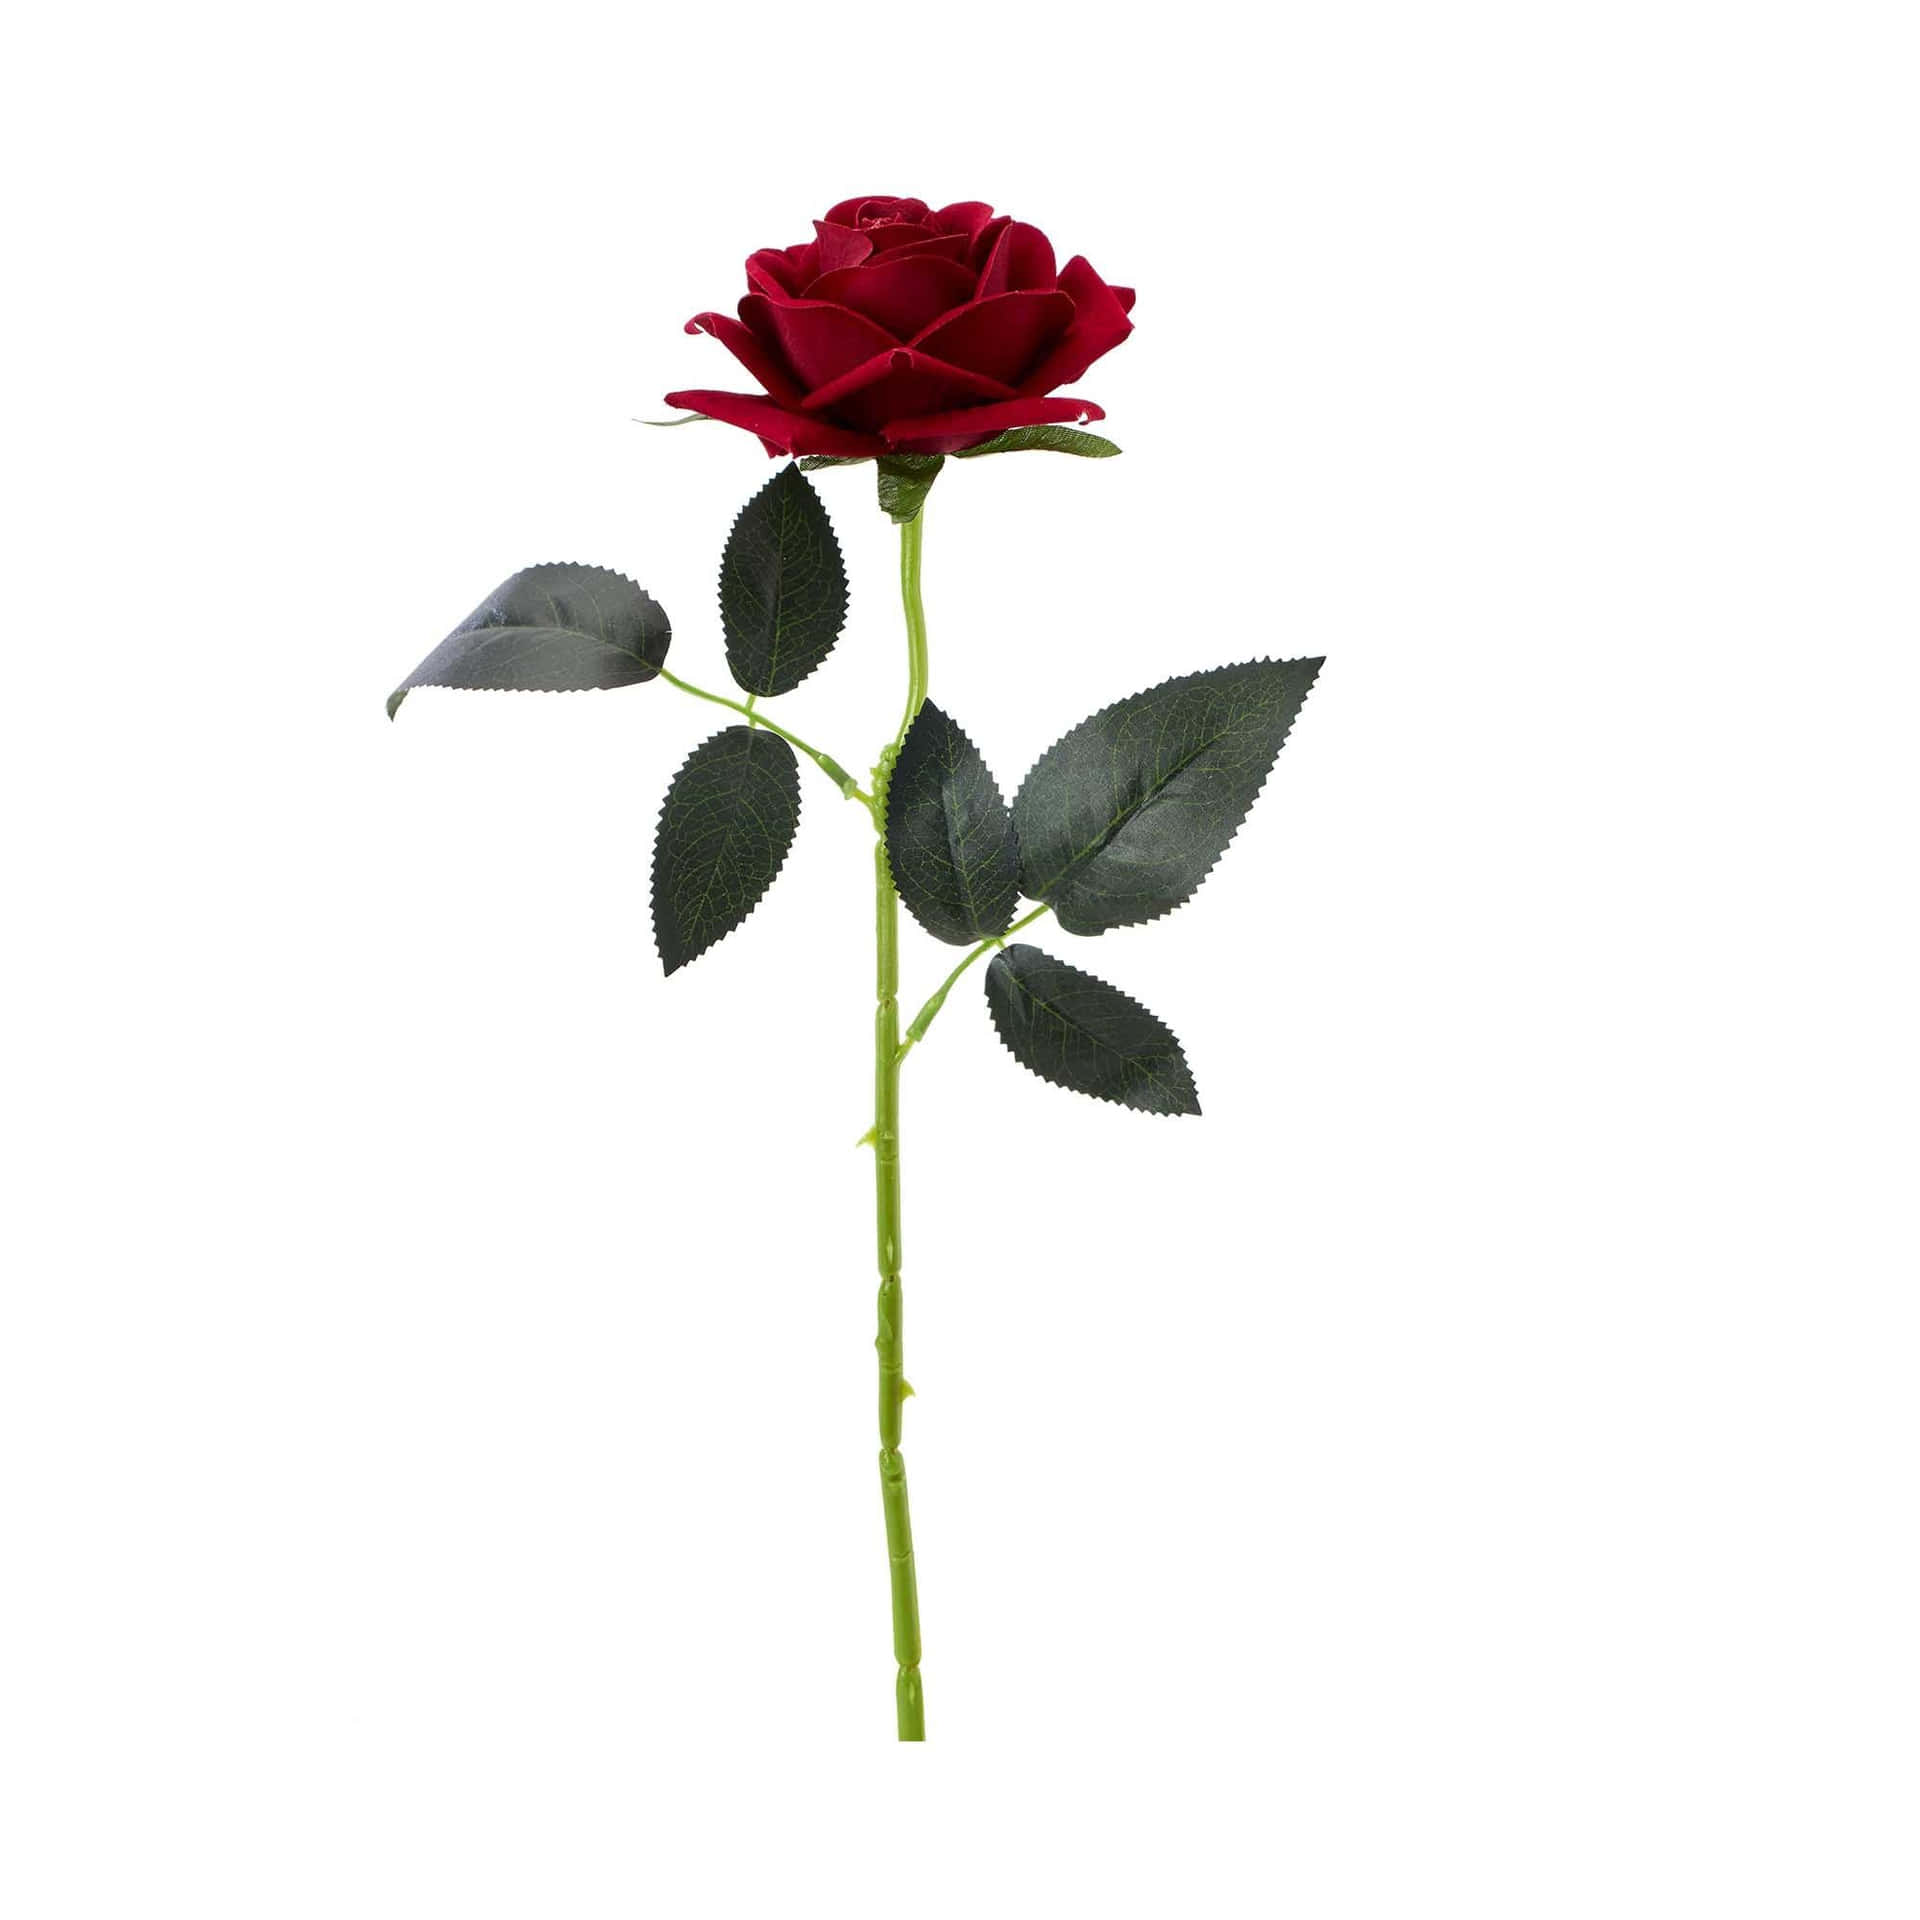 Elegant Single Red Rose Wallpaper